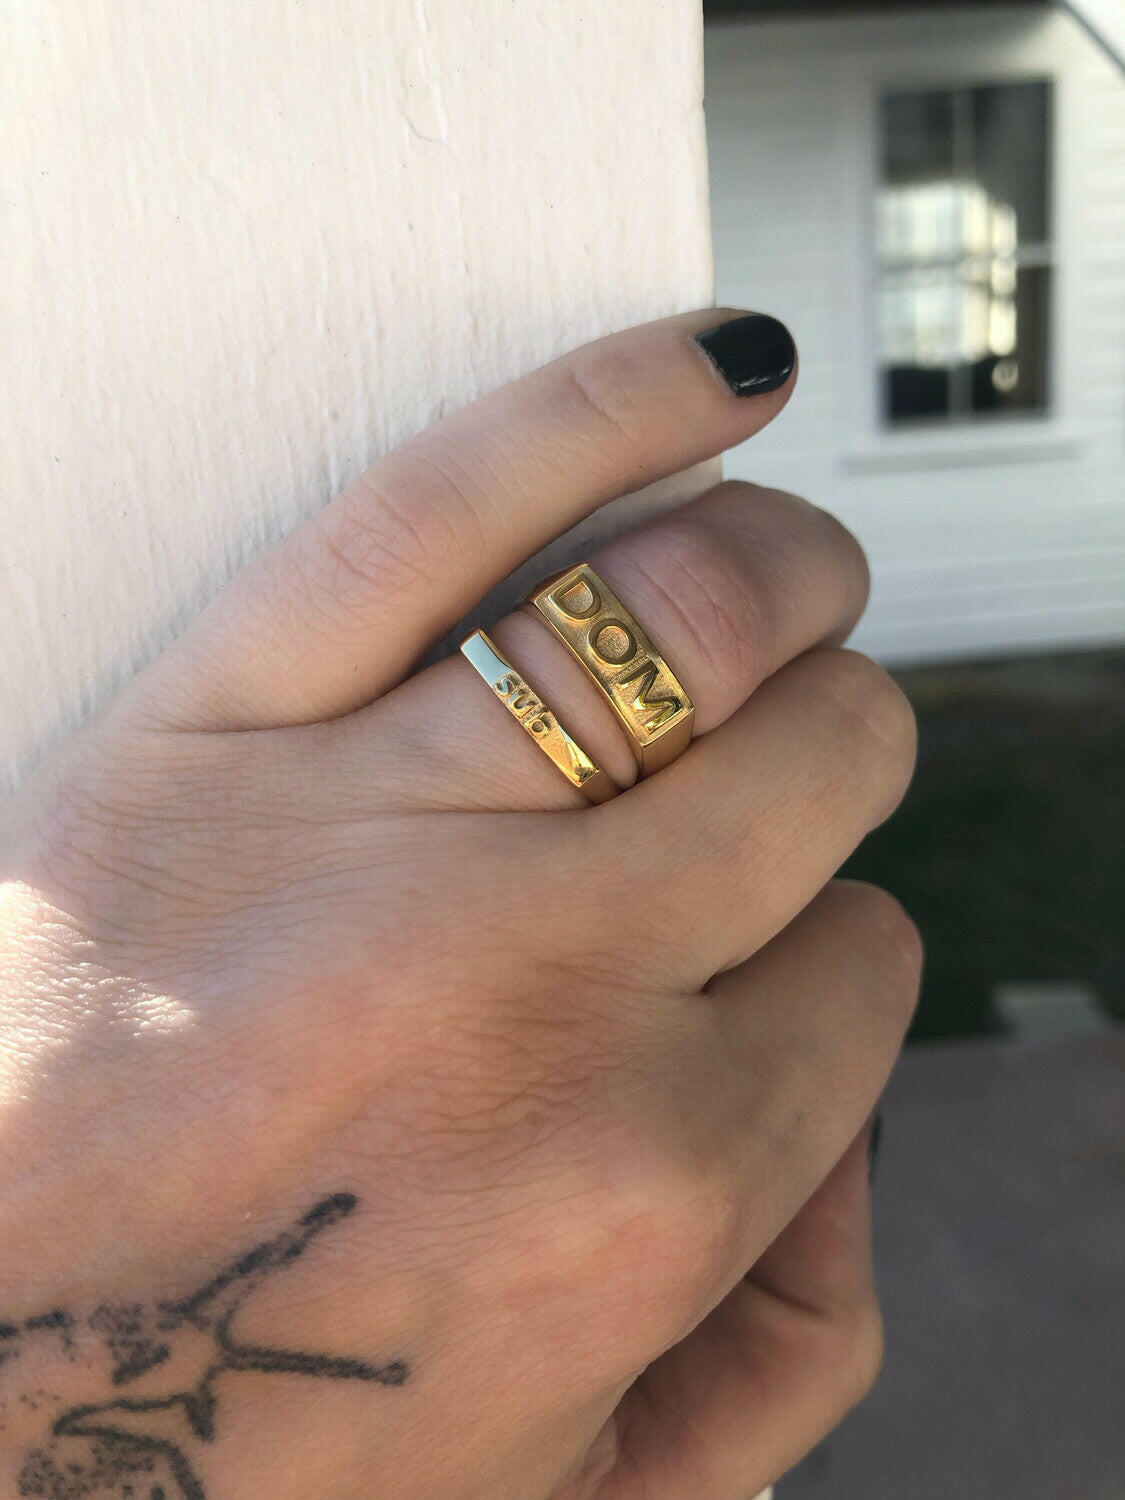 sub - Ilah Cibis Jewelry-Rings